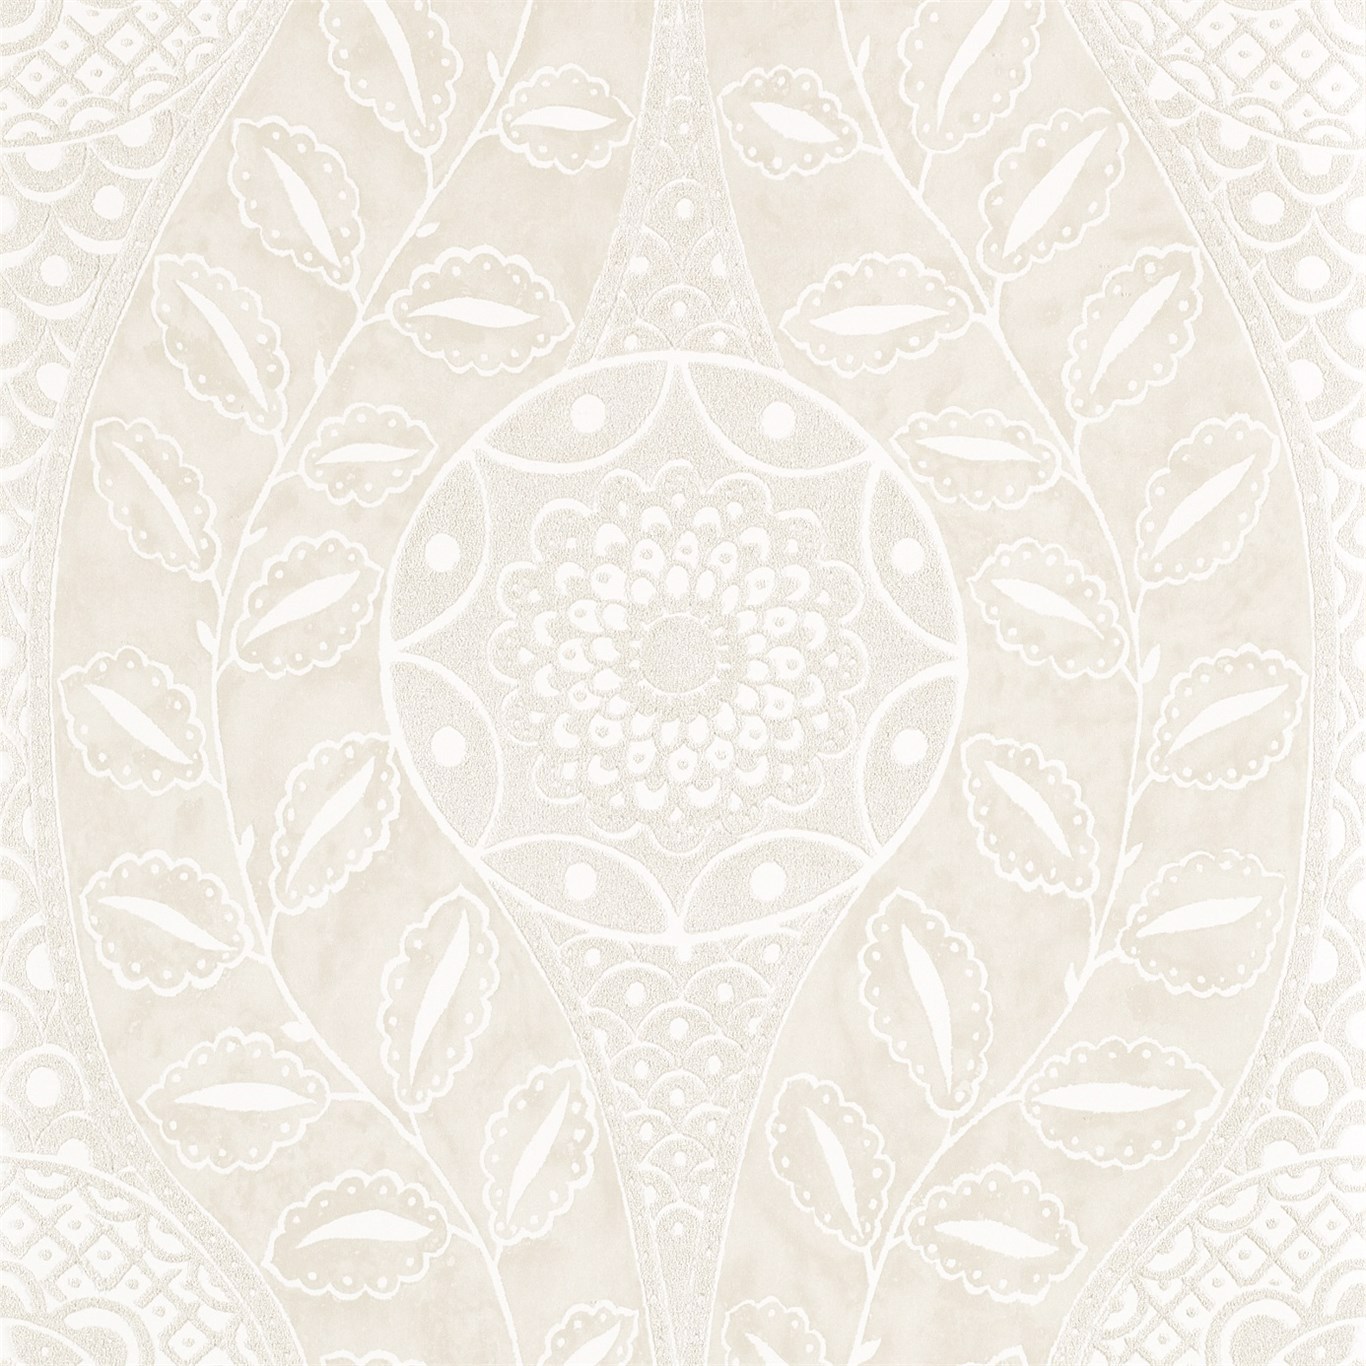 Florentine Shell Wallpaper by HAR